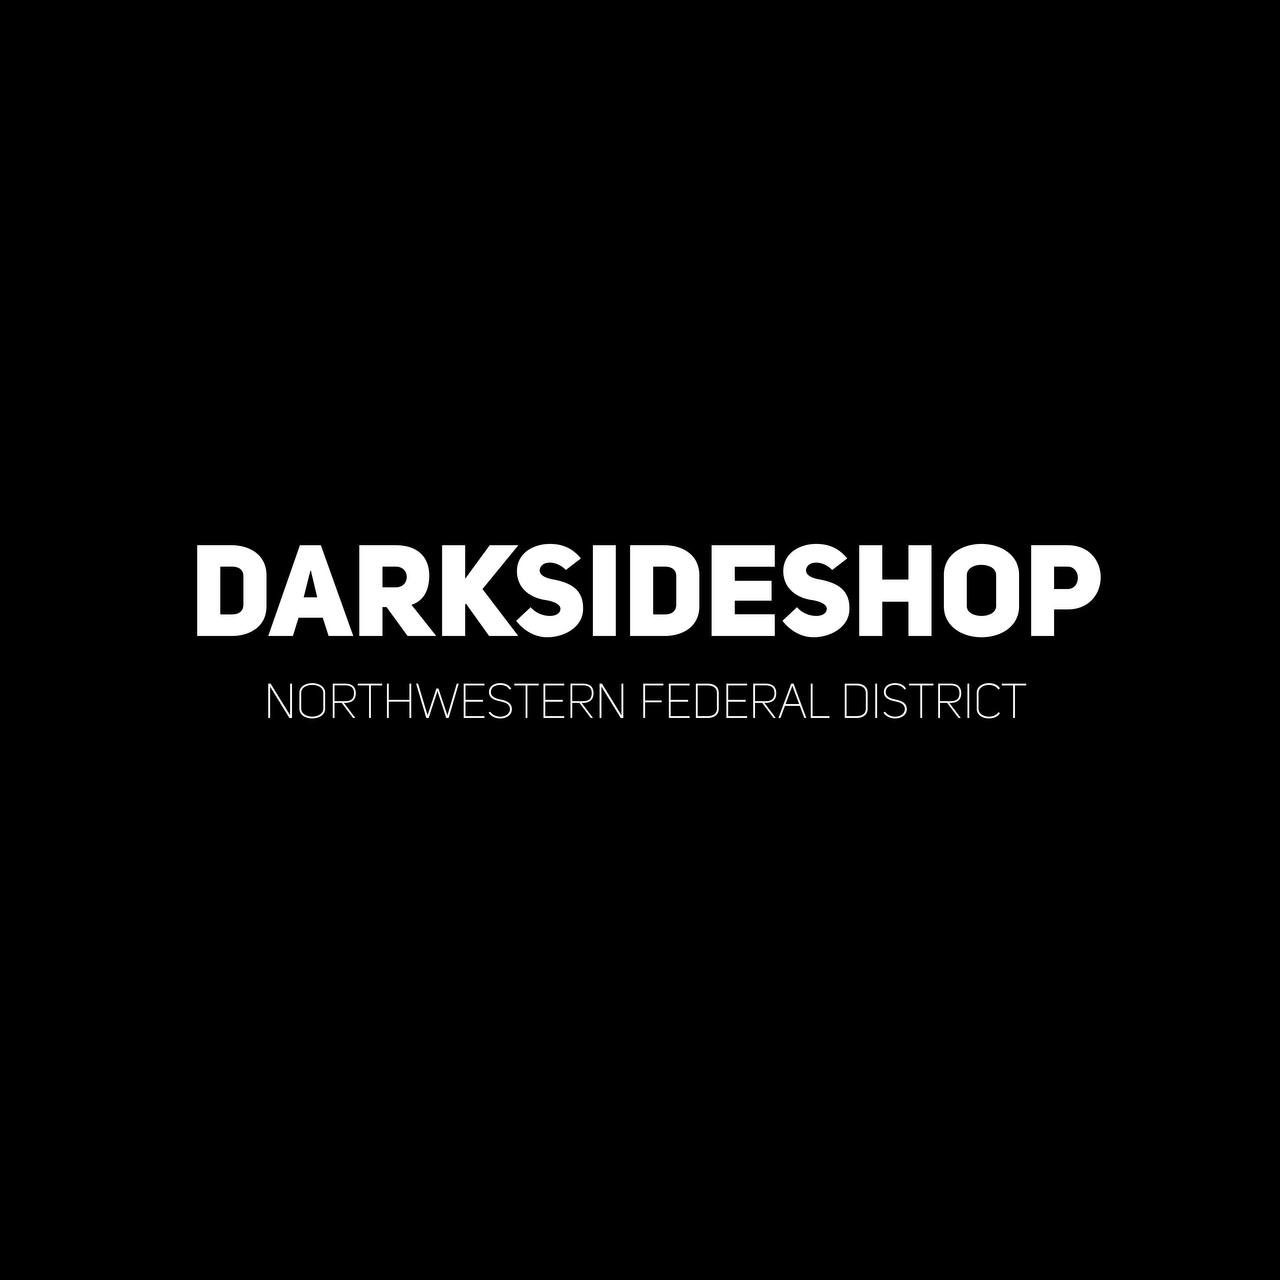 Darksideshop